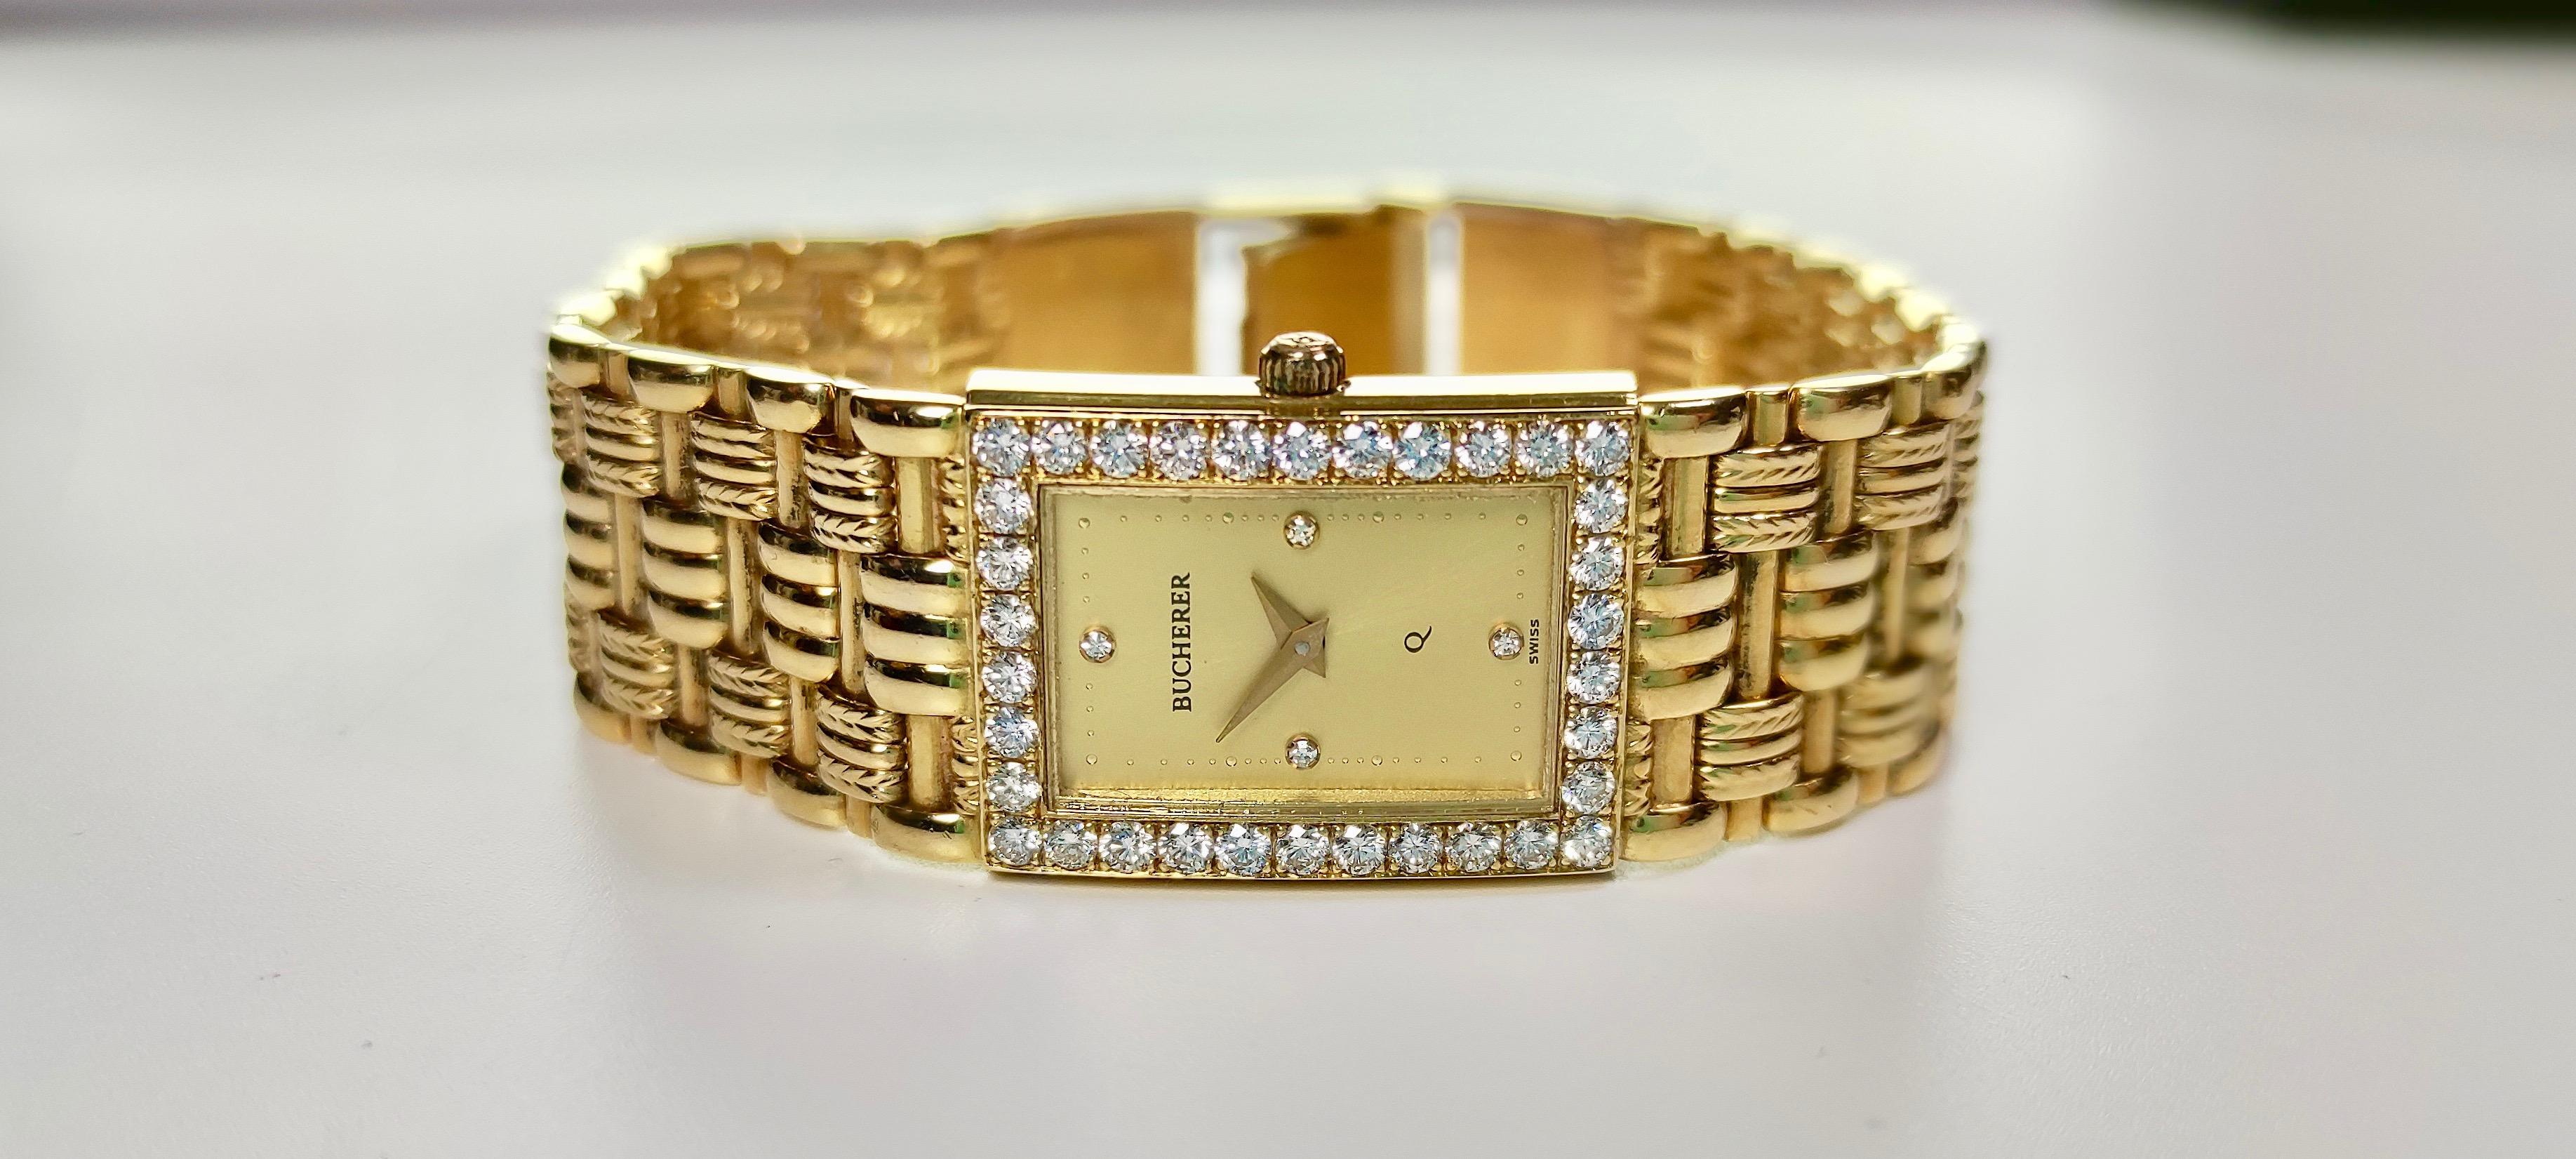 Bucherer Lady watch
Gold 18k and Diamonds
Diameter 24x20 mm
Perfectly working
